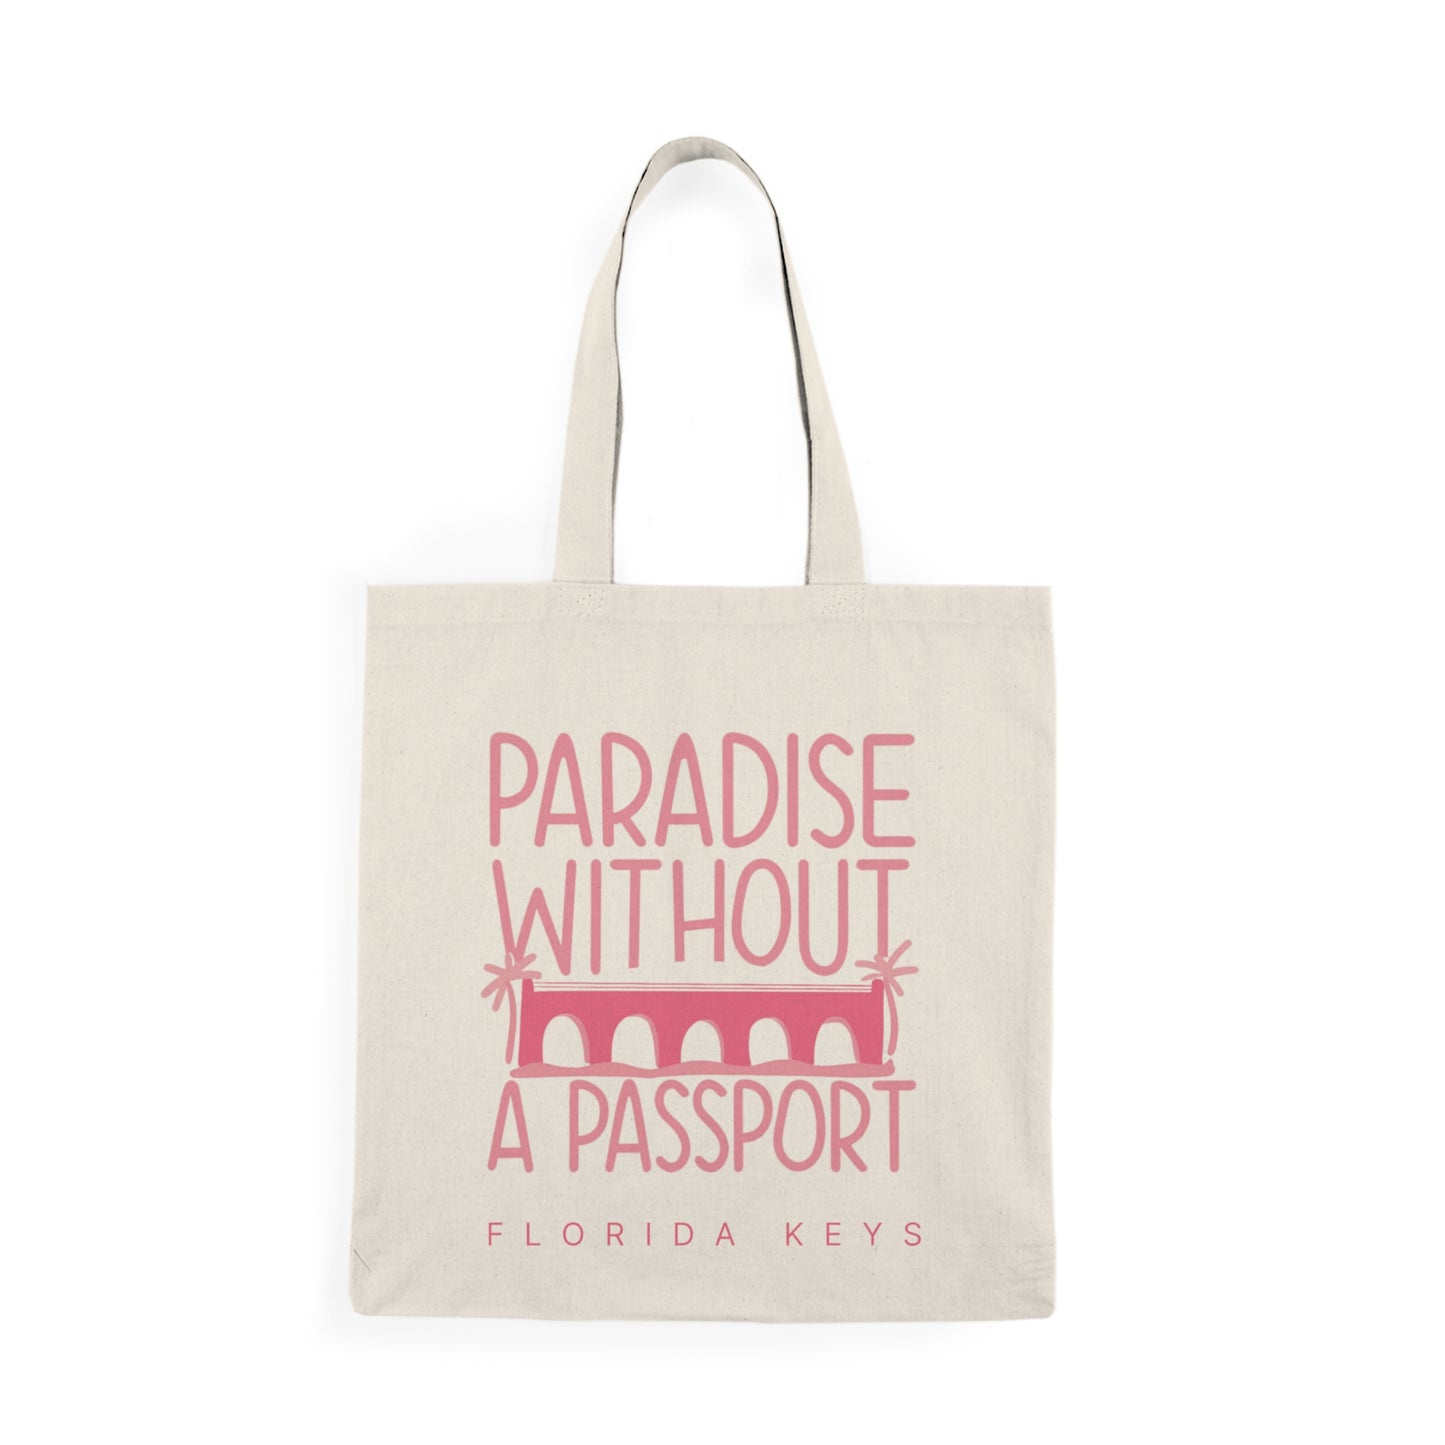 Paradise without a passport - Florida keys - Natural Tote Bag - pink